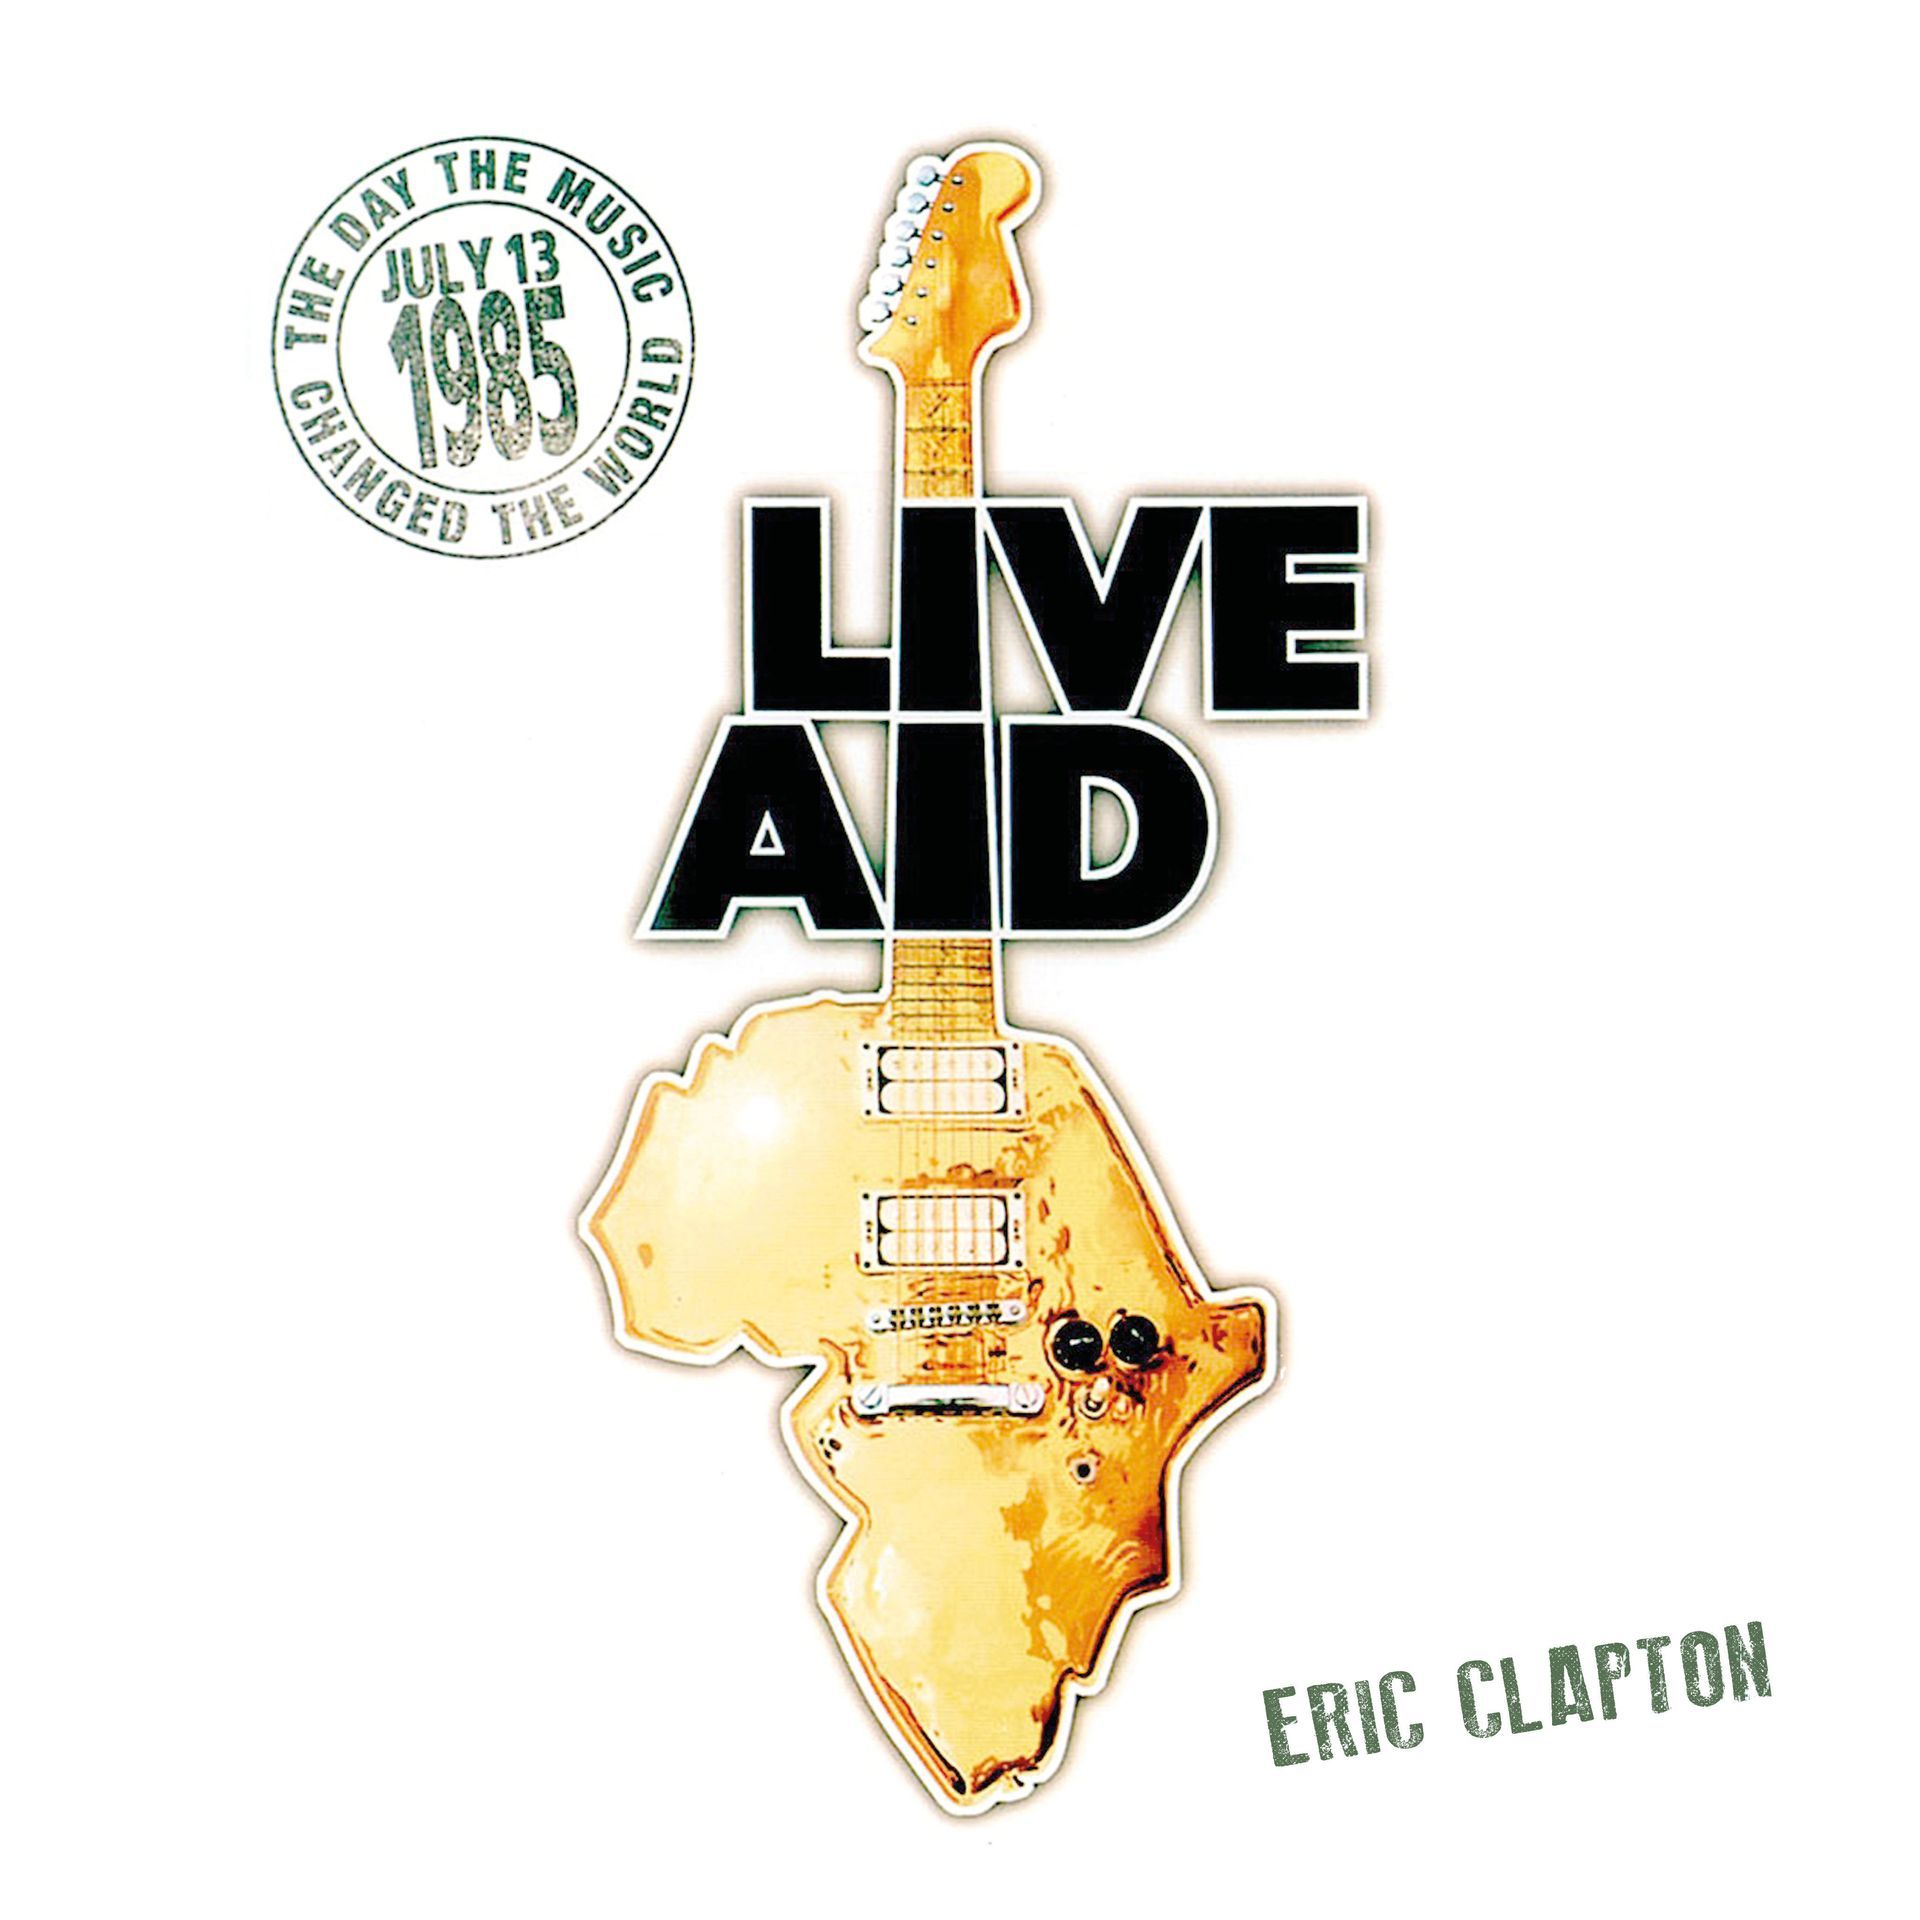 Eric Clapton at Live Aid (live at John F. Kennedy Stadium, 13th July 1985) album art